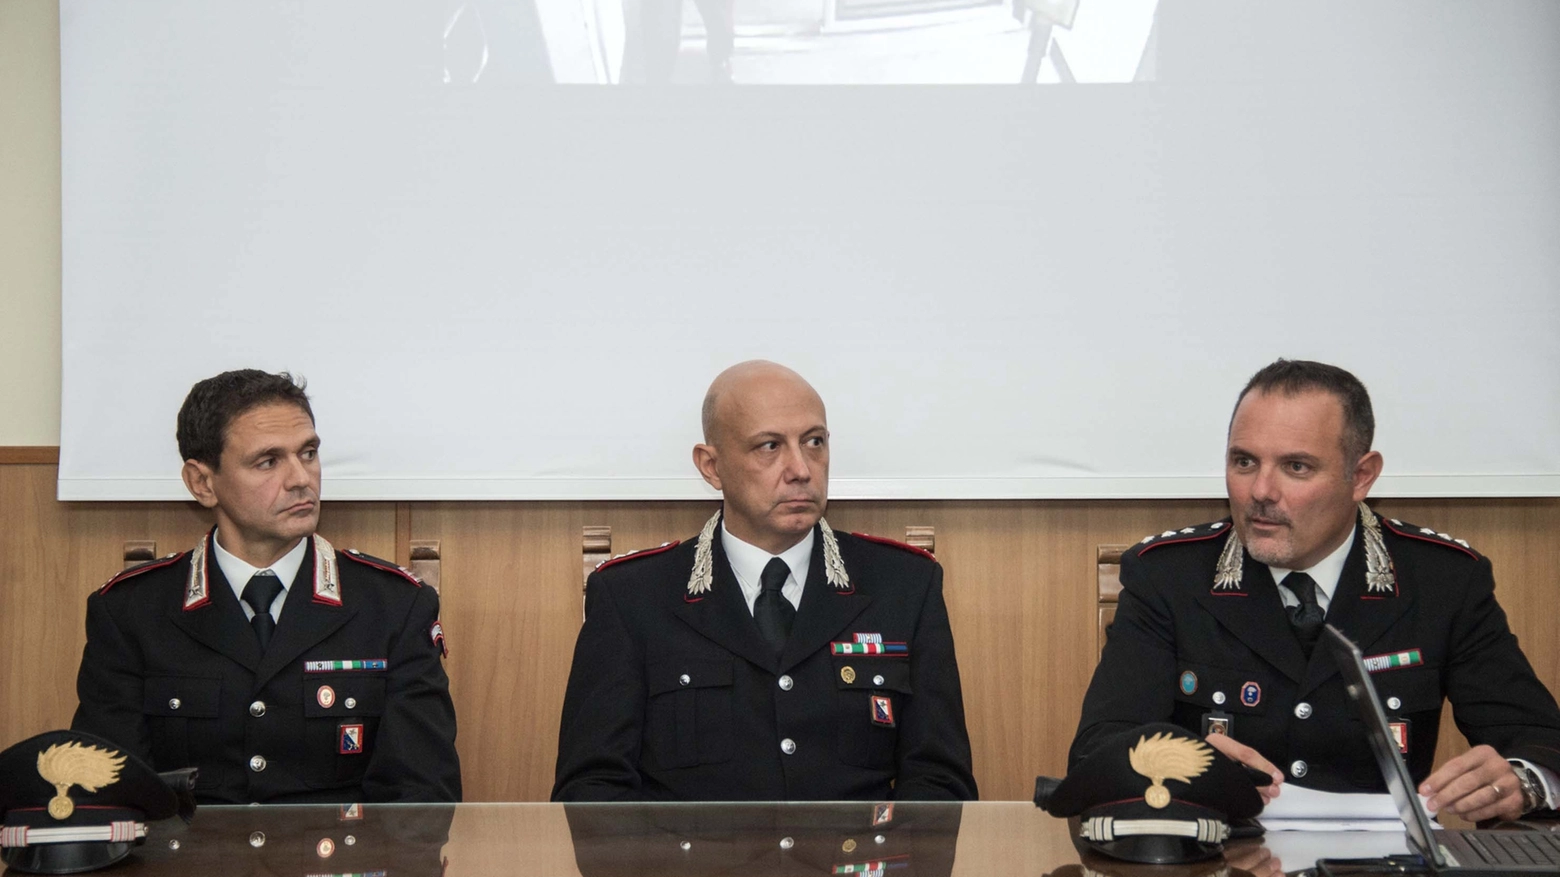 Conferenza stampa dei carabinieri 